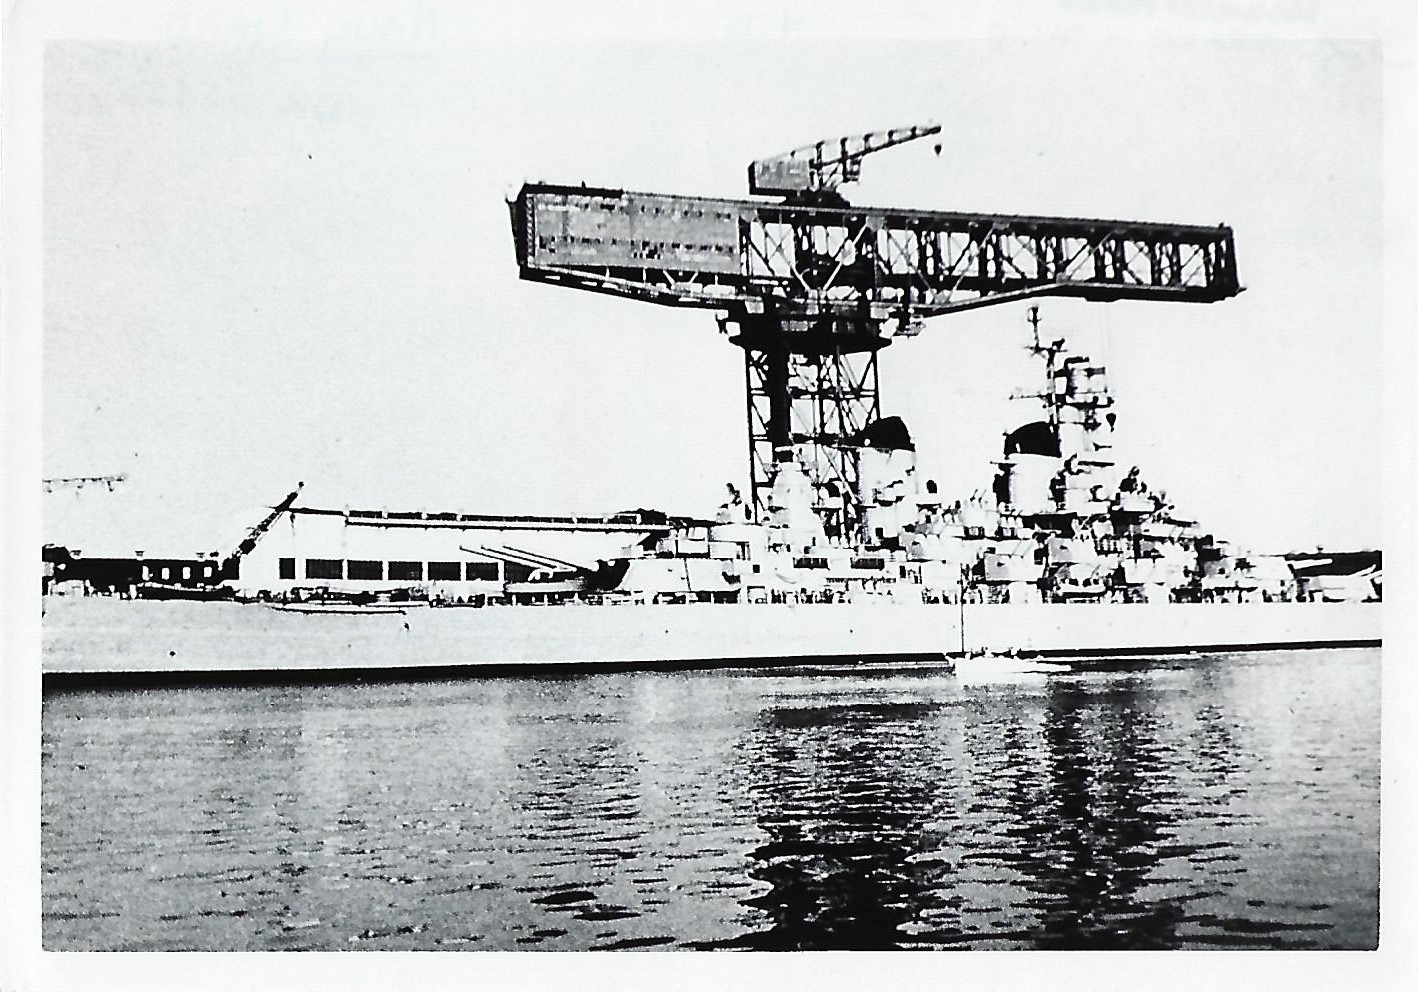 Hamerhead Crane and warship in 1941